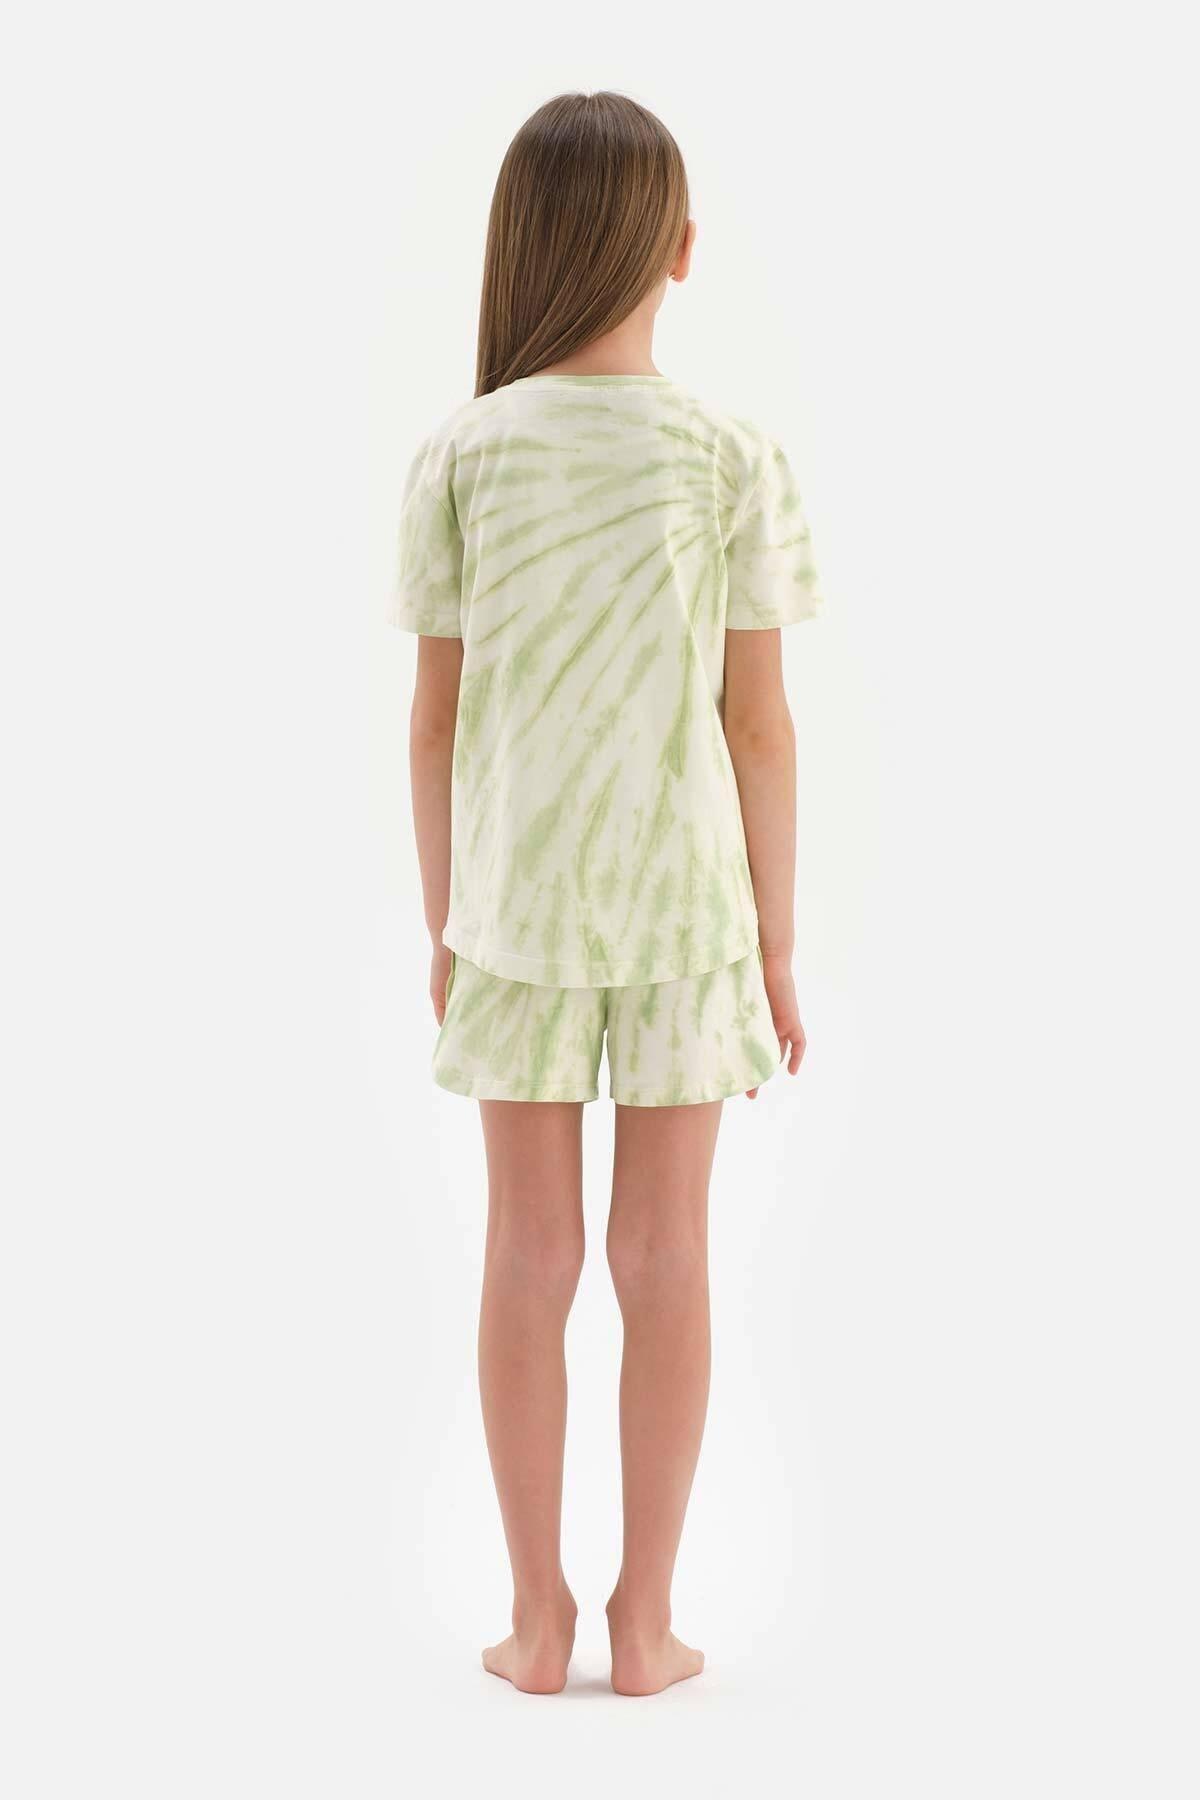 Dagi - Green Printed Short Sleeve Pyjamas Set, Kids Boys